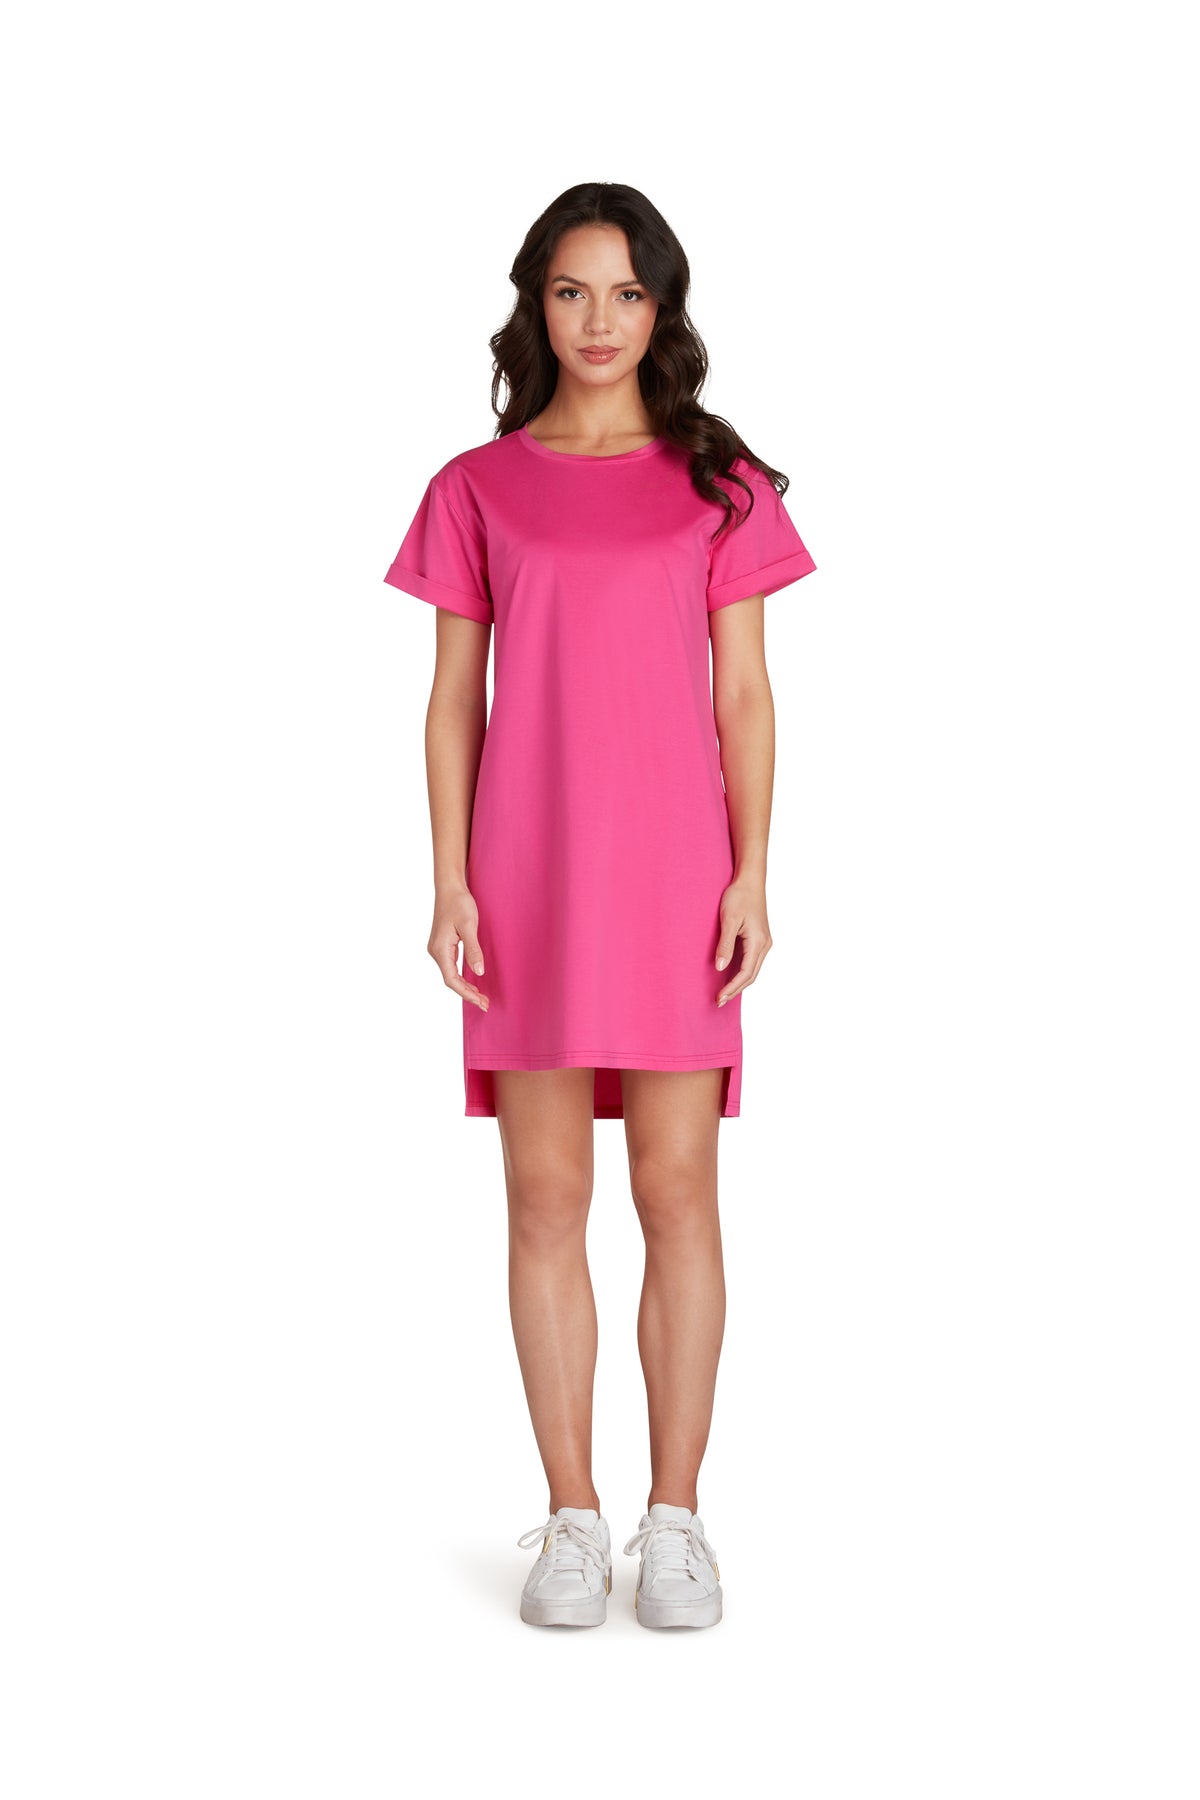 Jayden T-Shirt Dress in Raspberry Rose